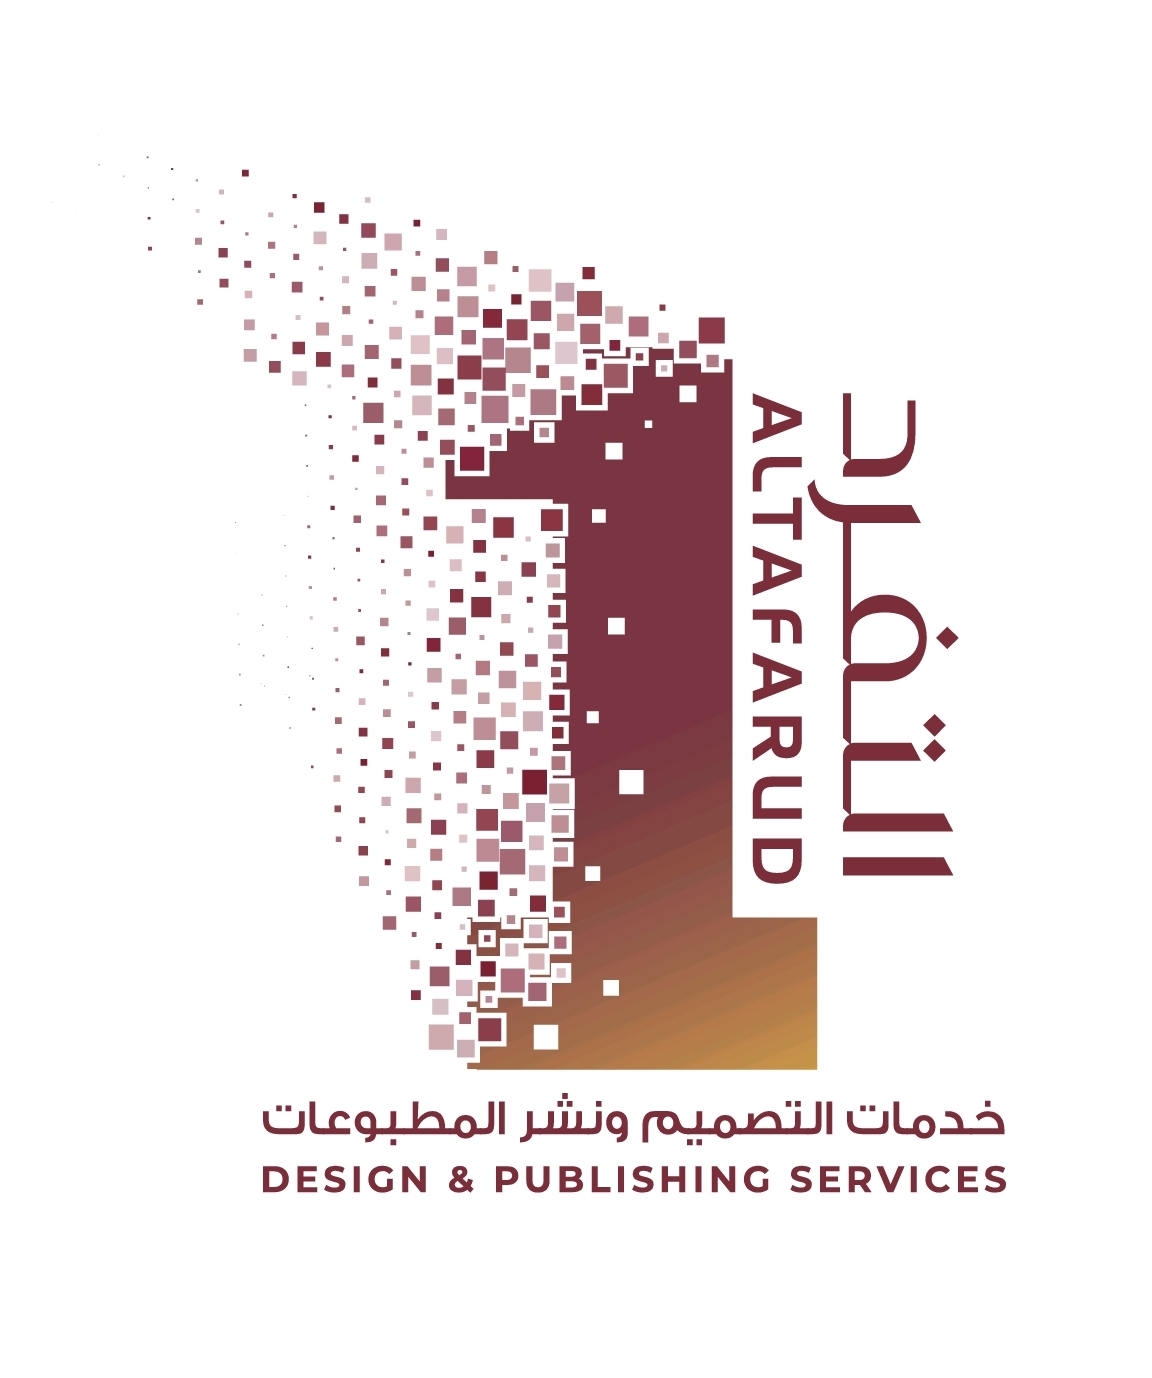 Altafarud design and publishing services